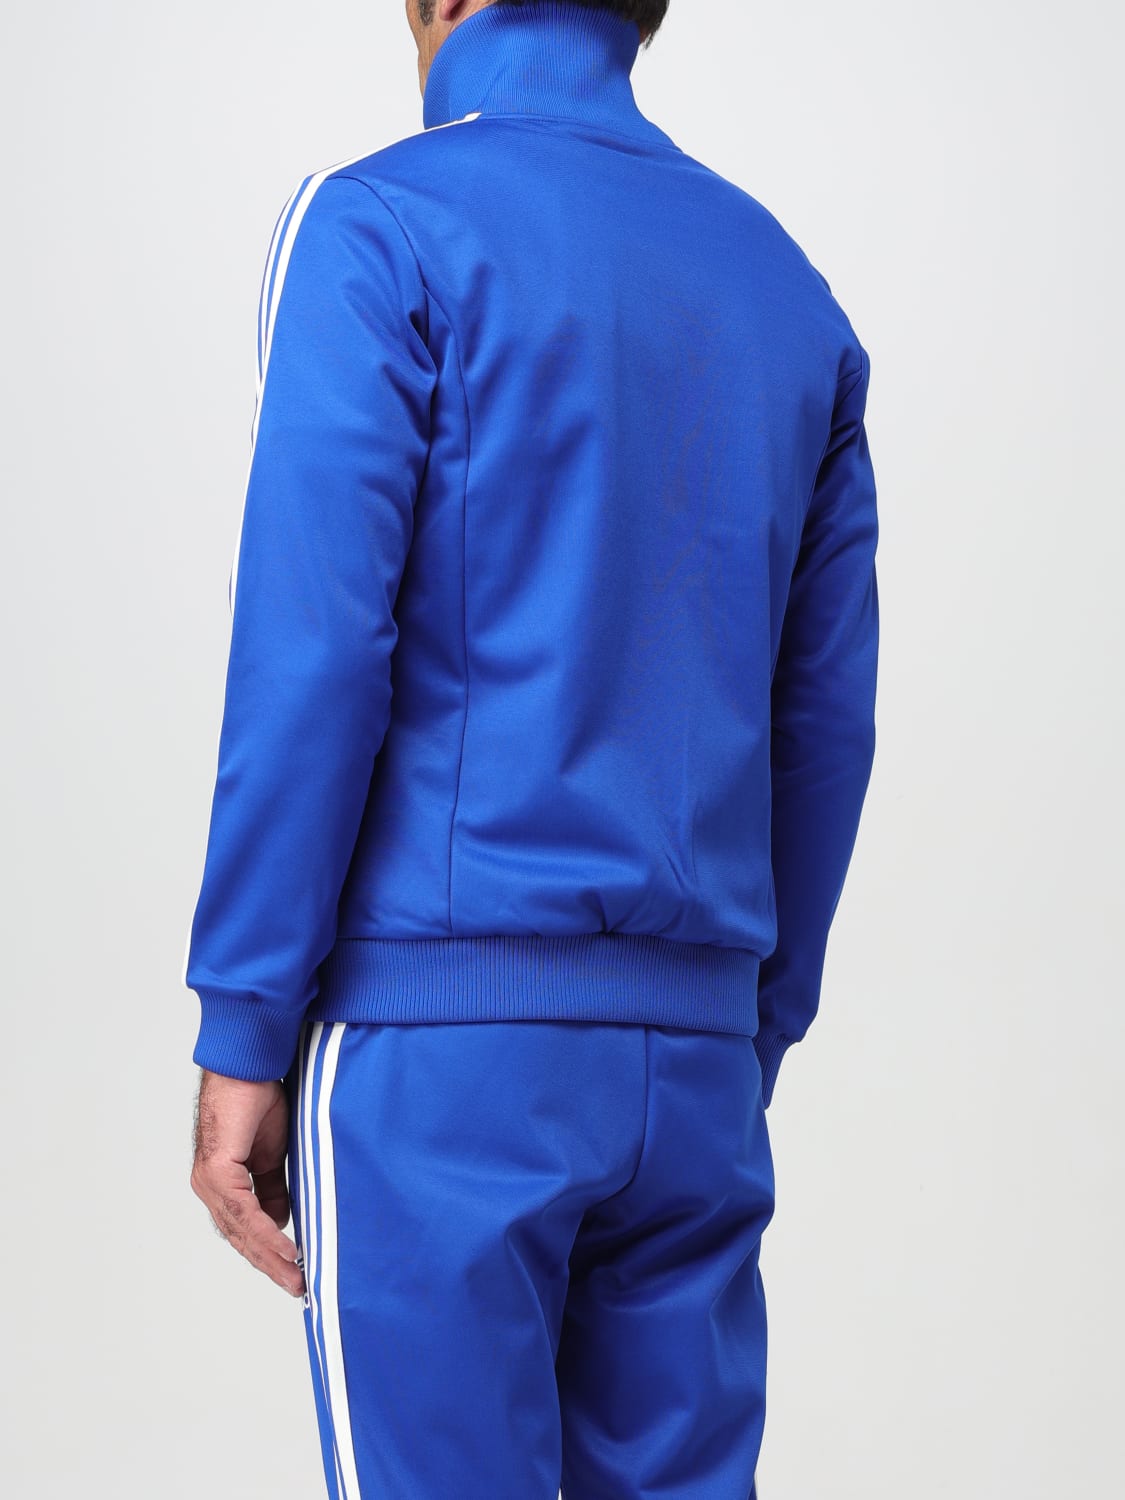 ADIDAS | man Adidas sweatshirt ORIGINALS: Originals IU2122 online - Blue for at sweatshirt Gnawed